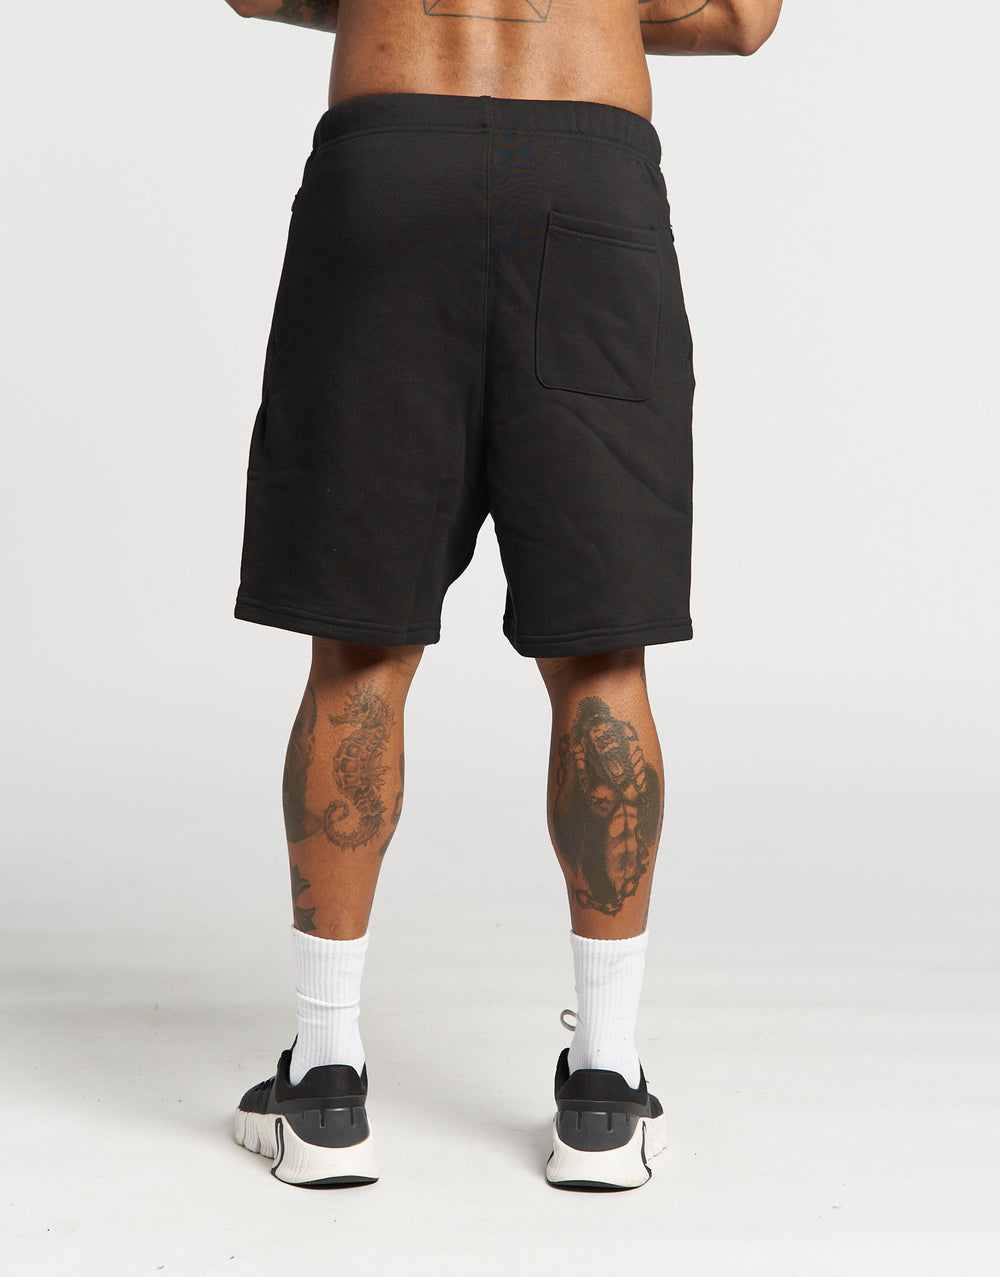 MLBRN Shorts - Black